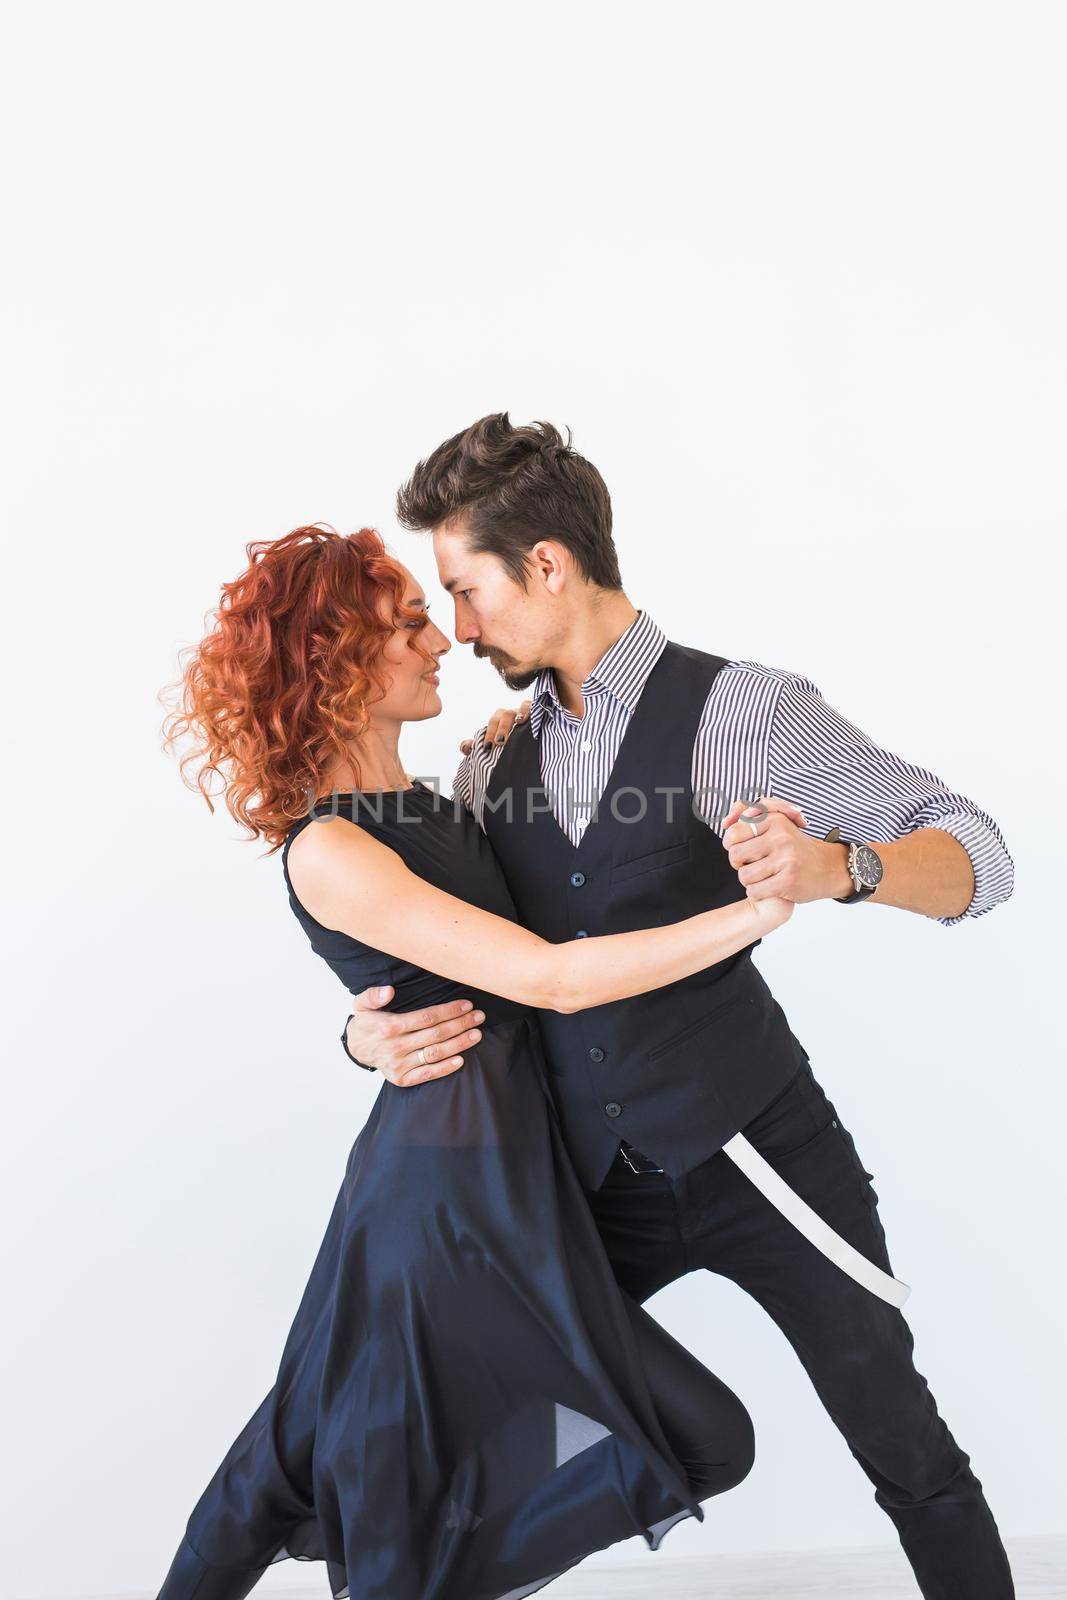 Social dance, bachata, kizomba, tango, salsa, people concept - Young couple dancing over white background by Satura86